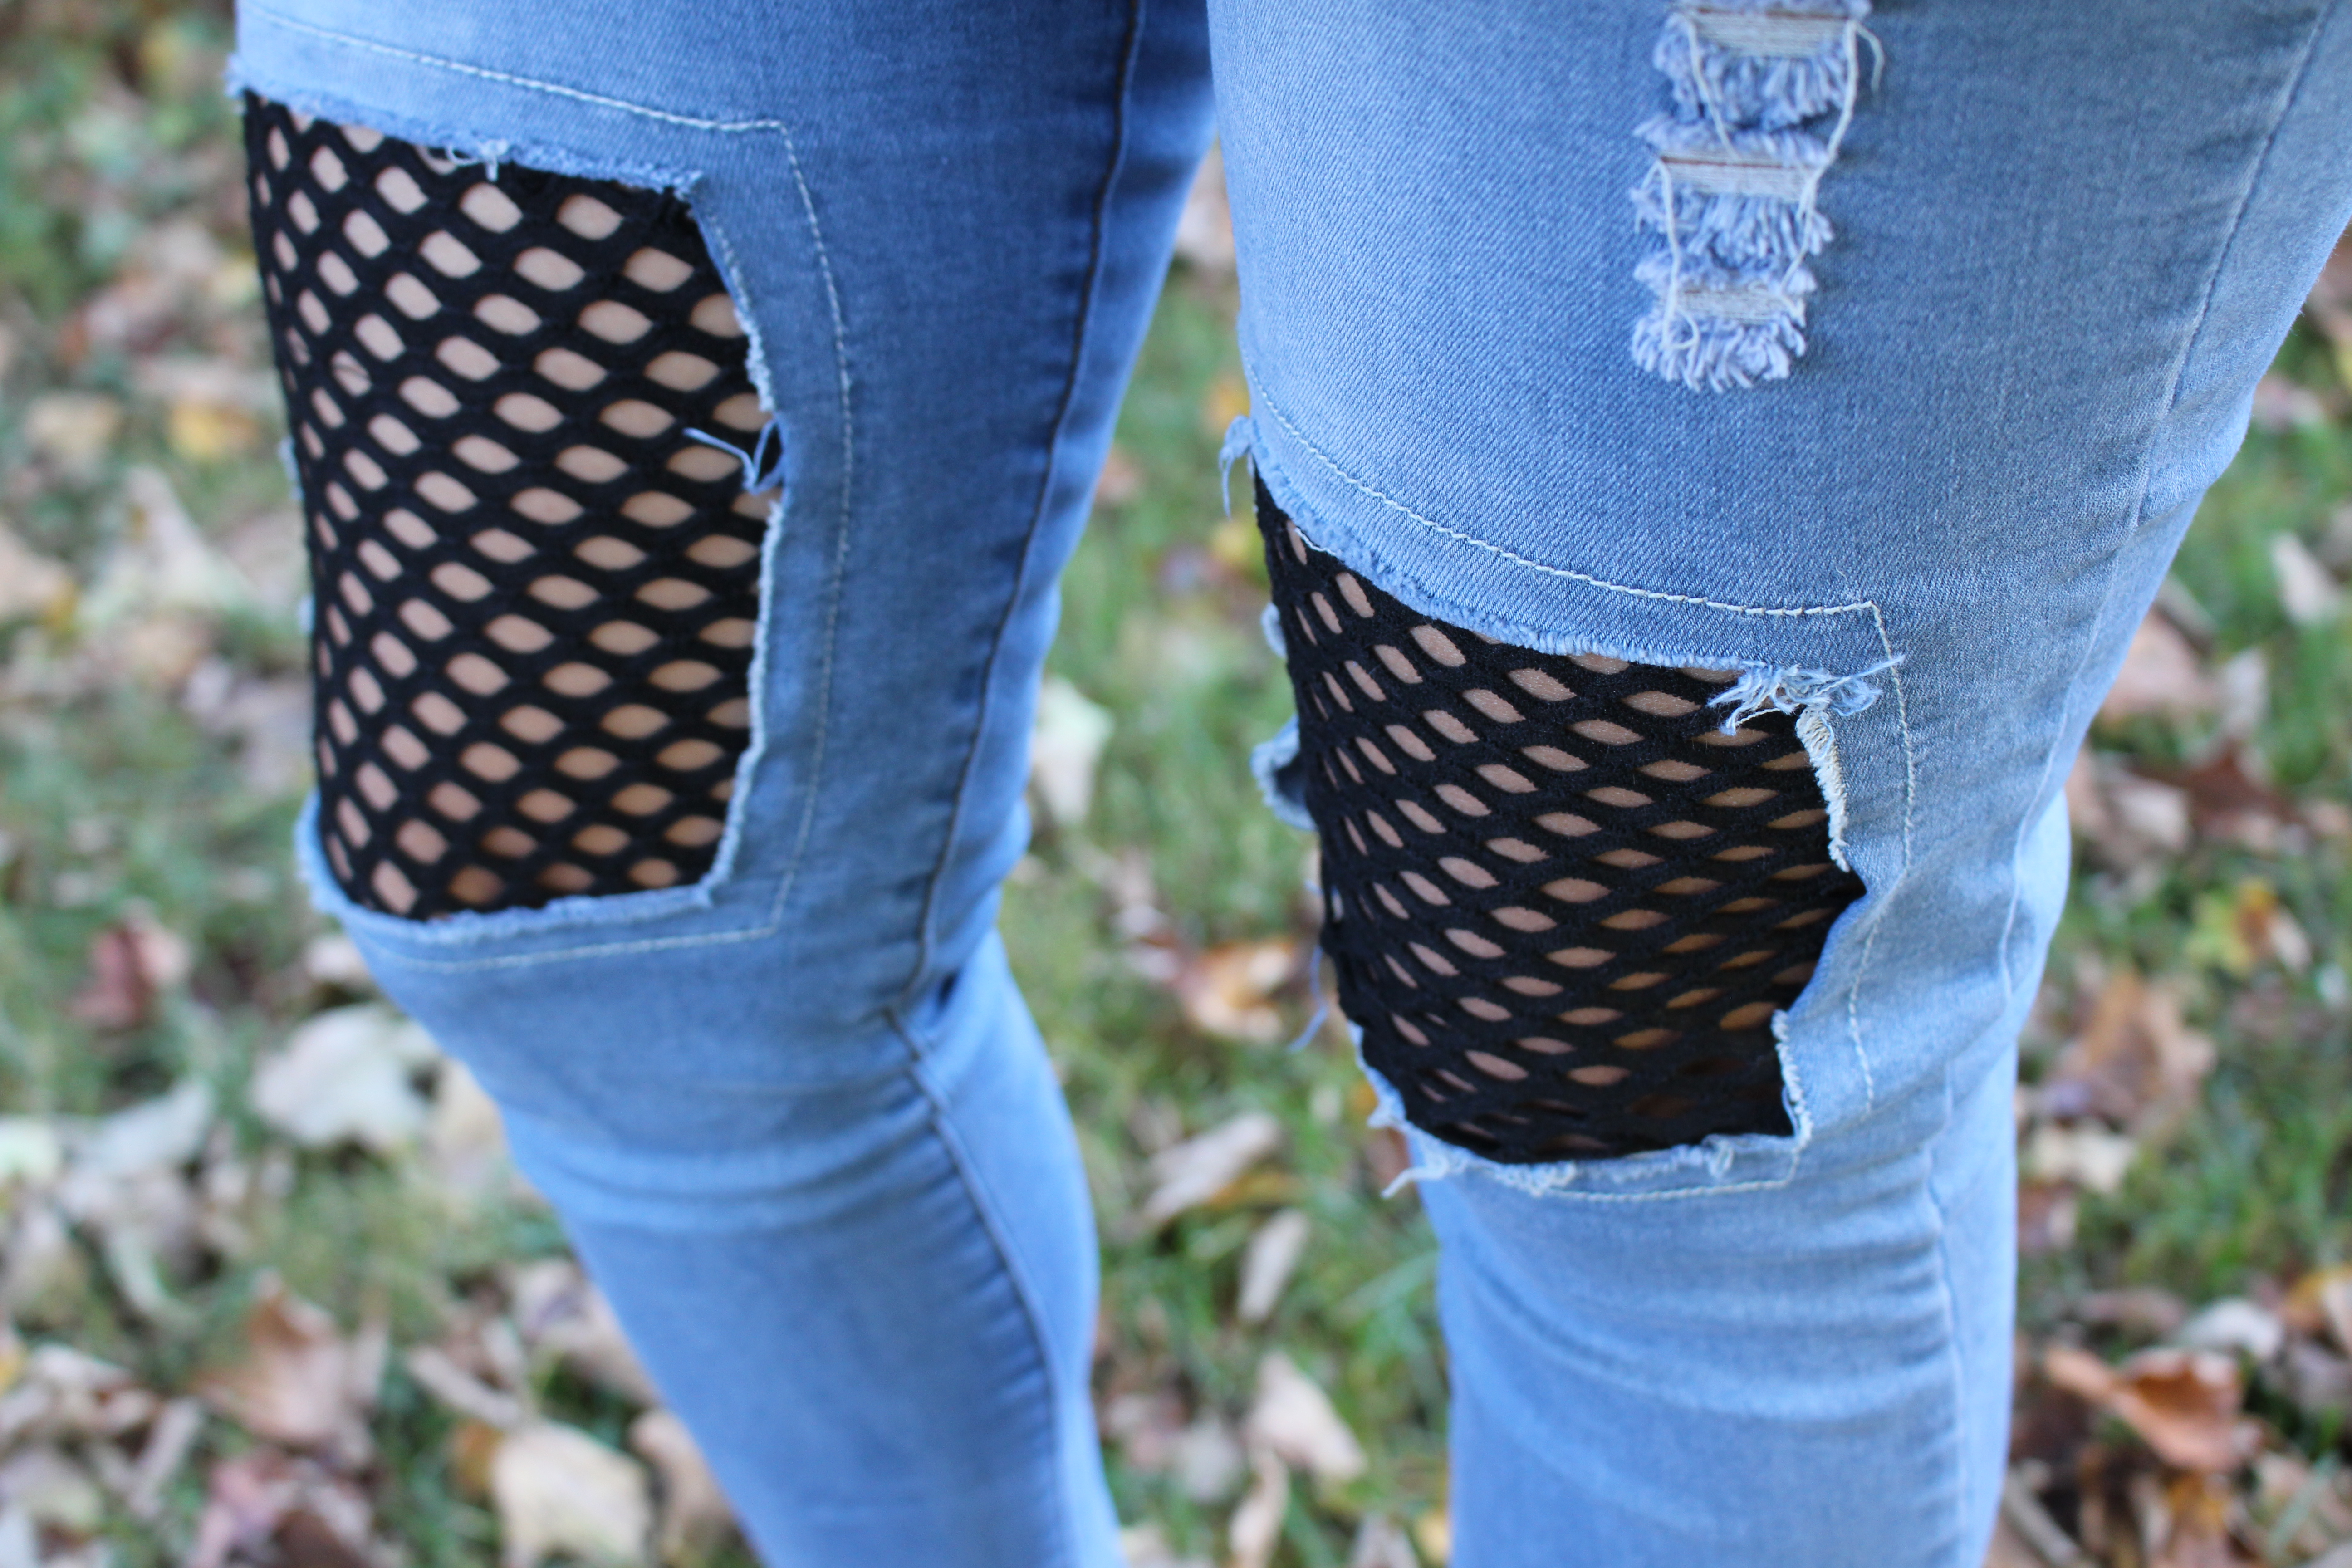 hot miami styles jeans rocker outfit jeans details by alejandra avila tufashionpetite